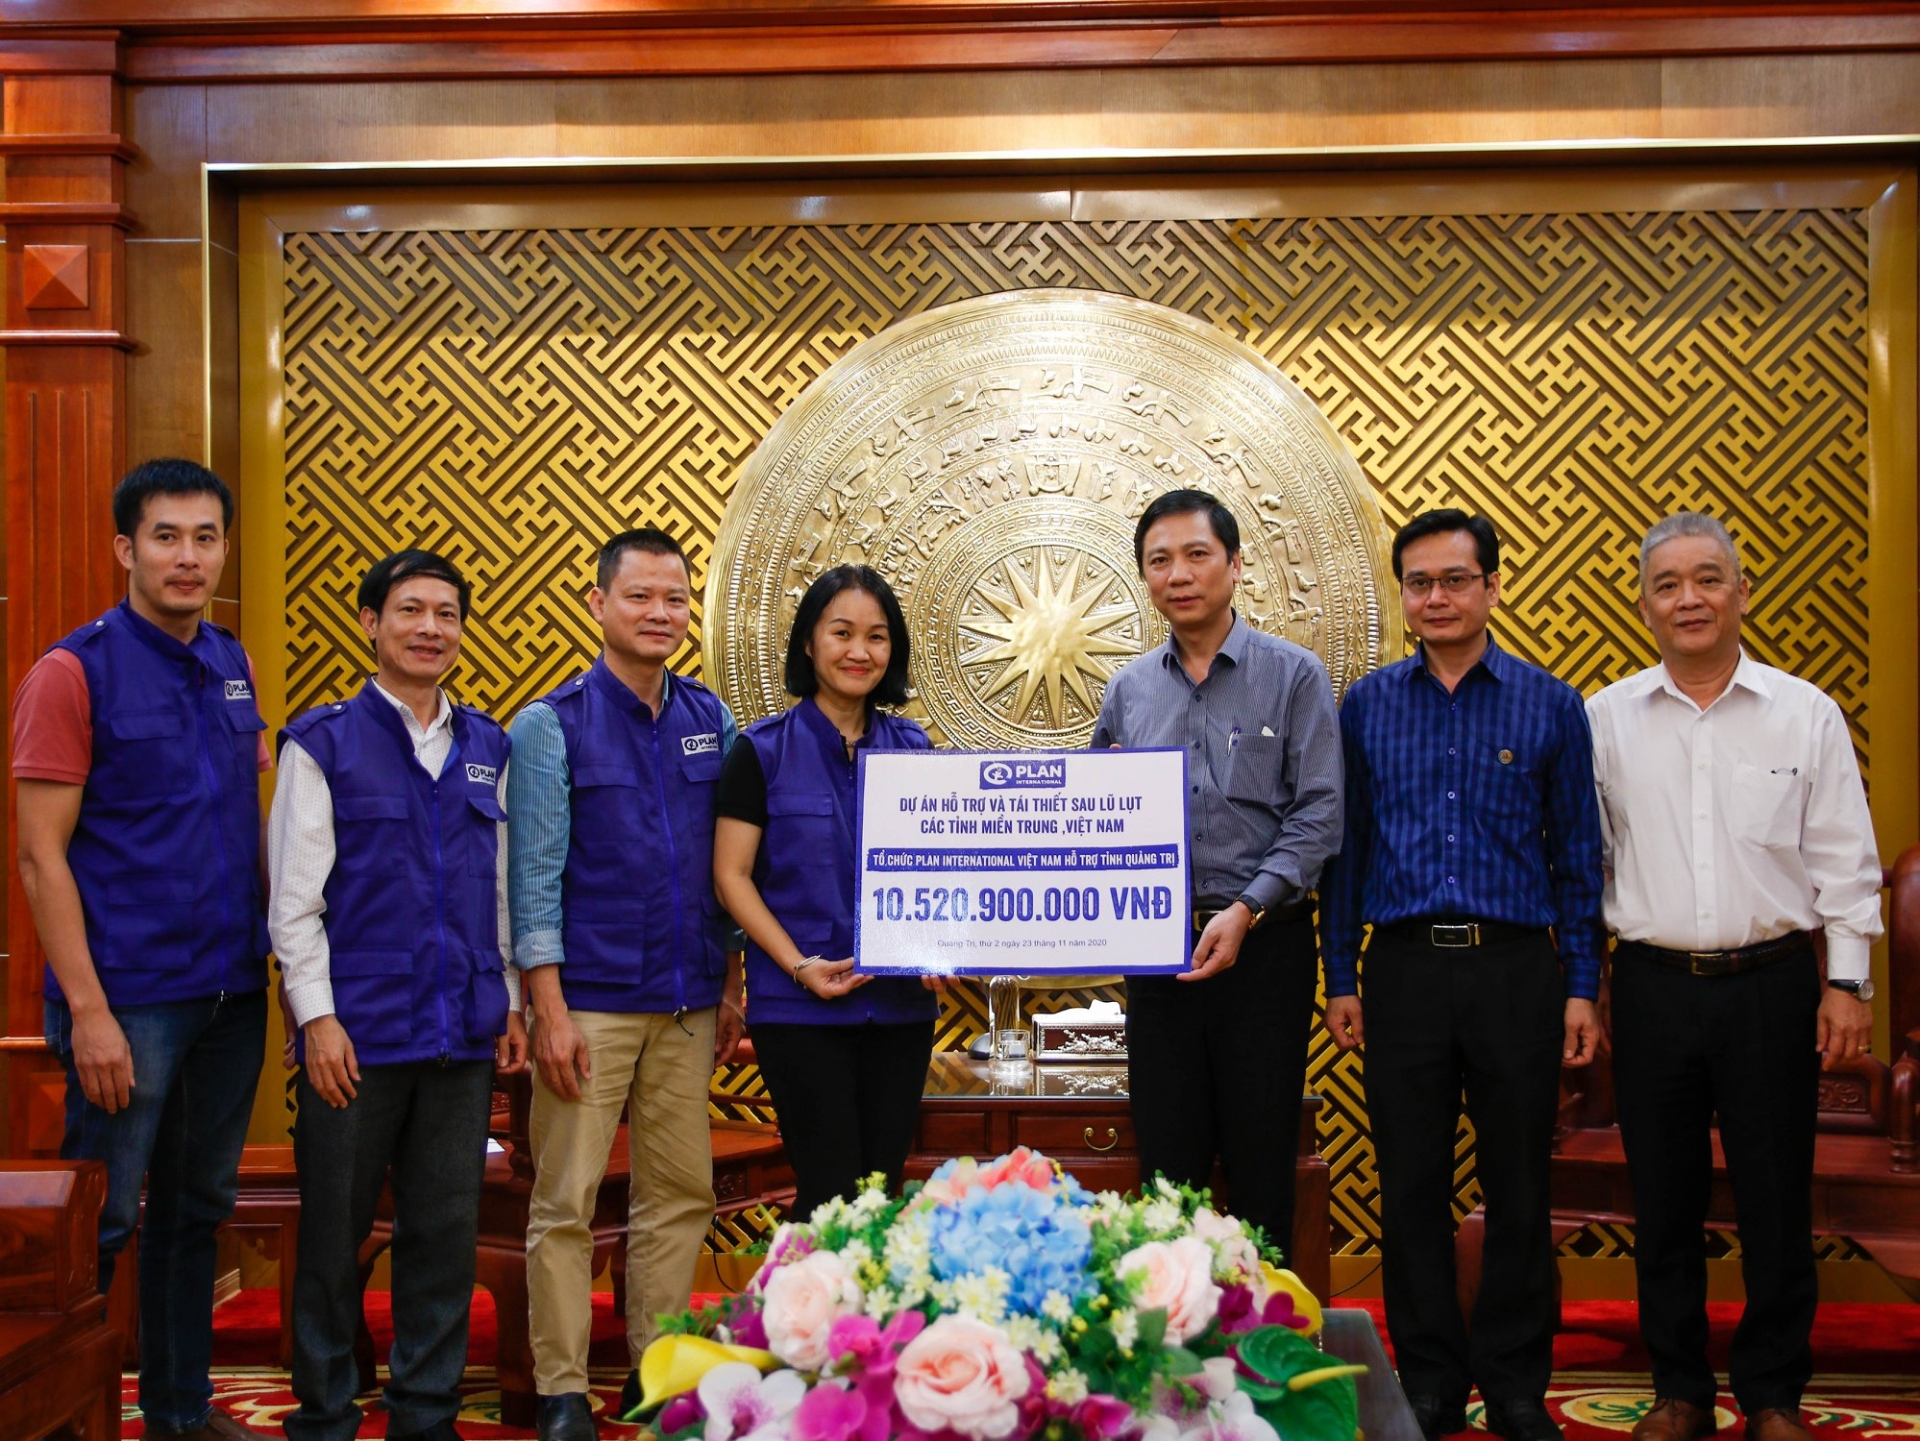 Plan International Vietnam pledges over VND 10.5 billion to support flood-hit Quang Tri province